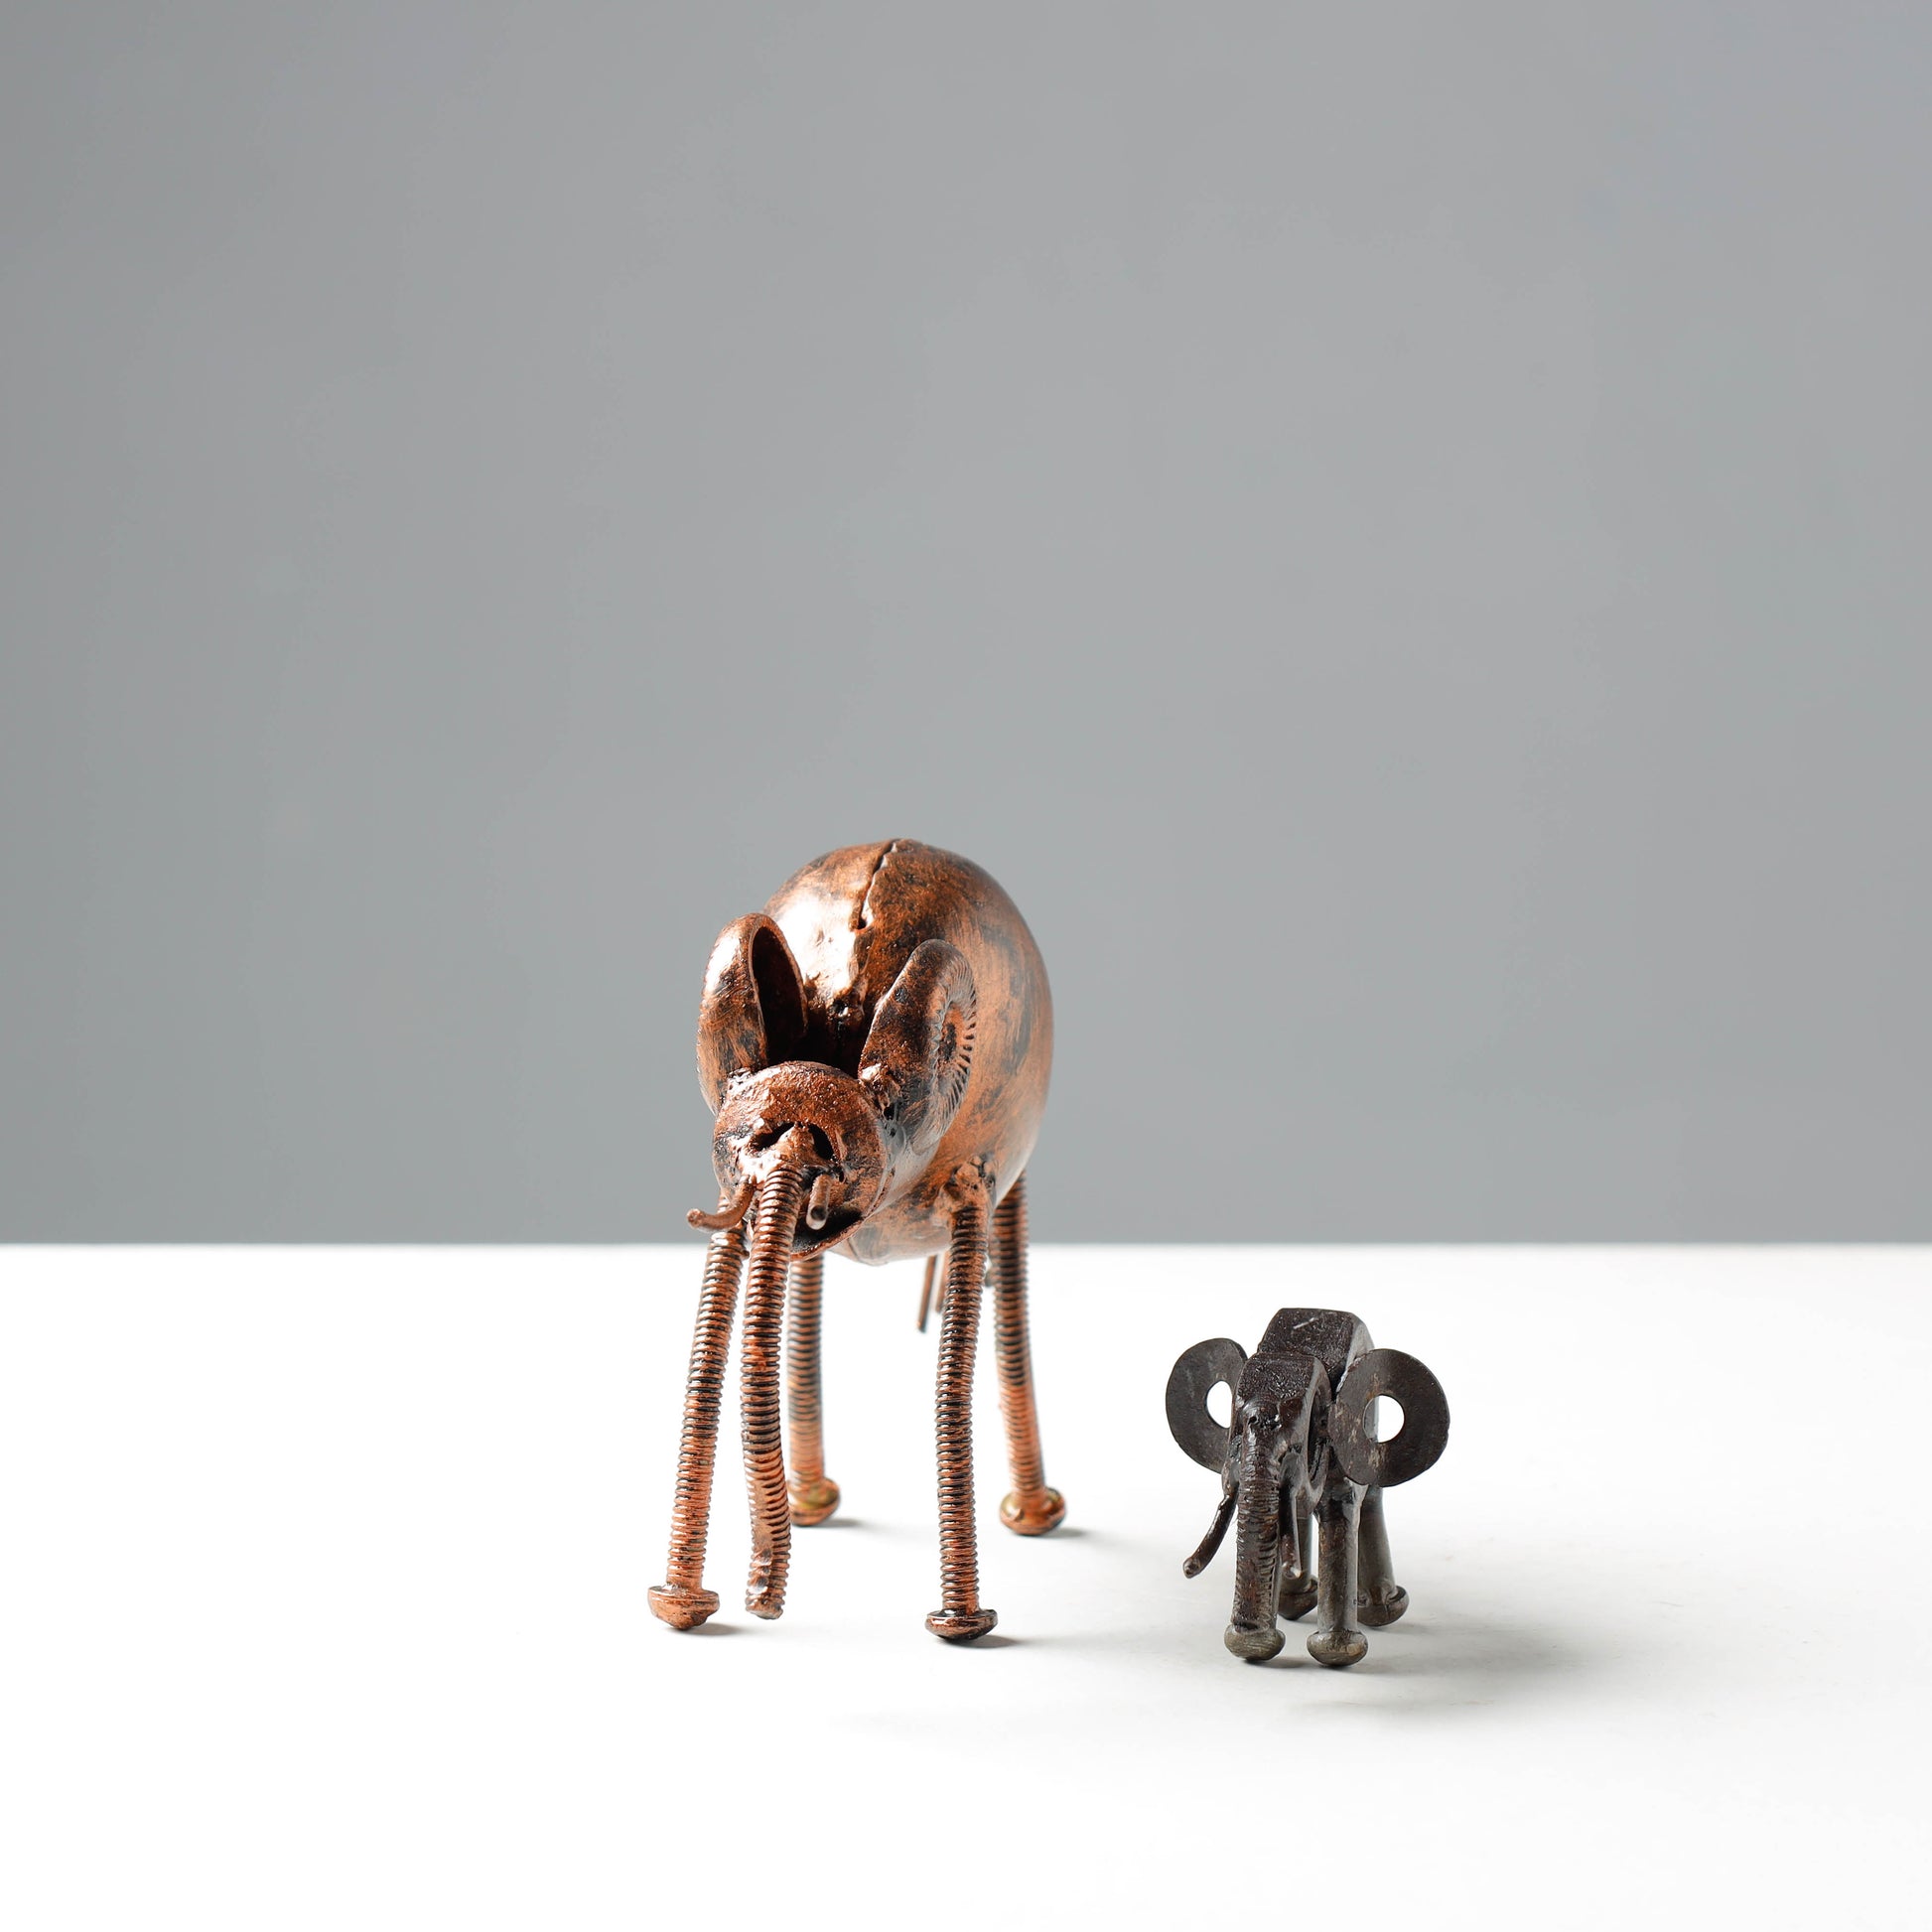 elephant sculpture